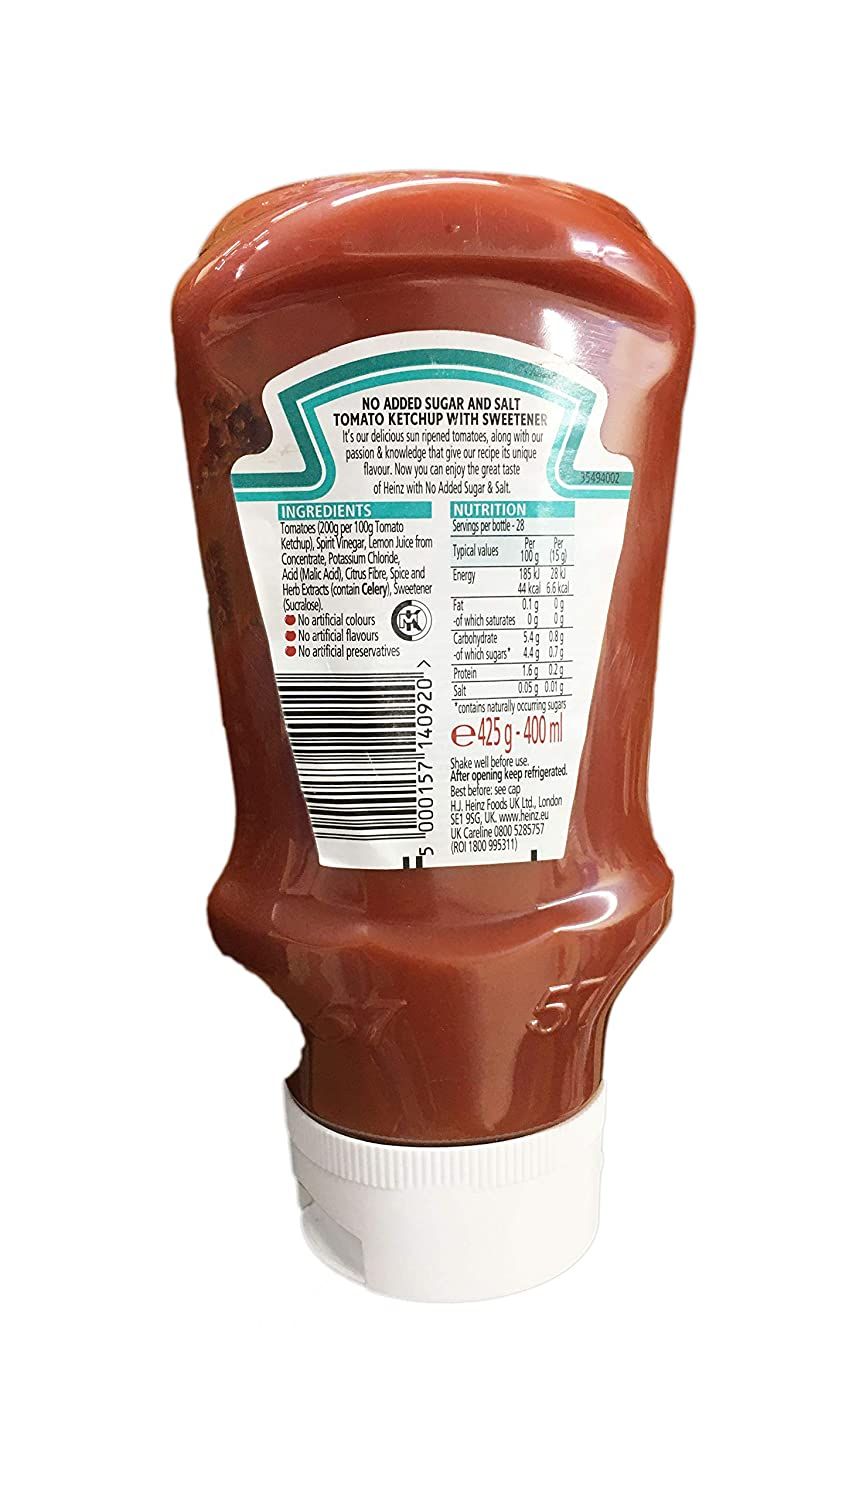 Heinz Tomato Ketchup with No Added Sugar & Salt Image